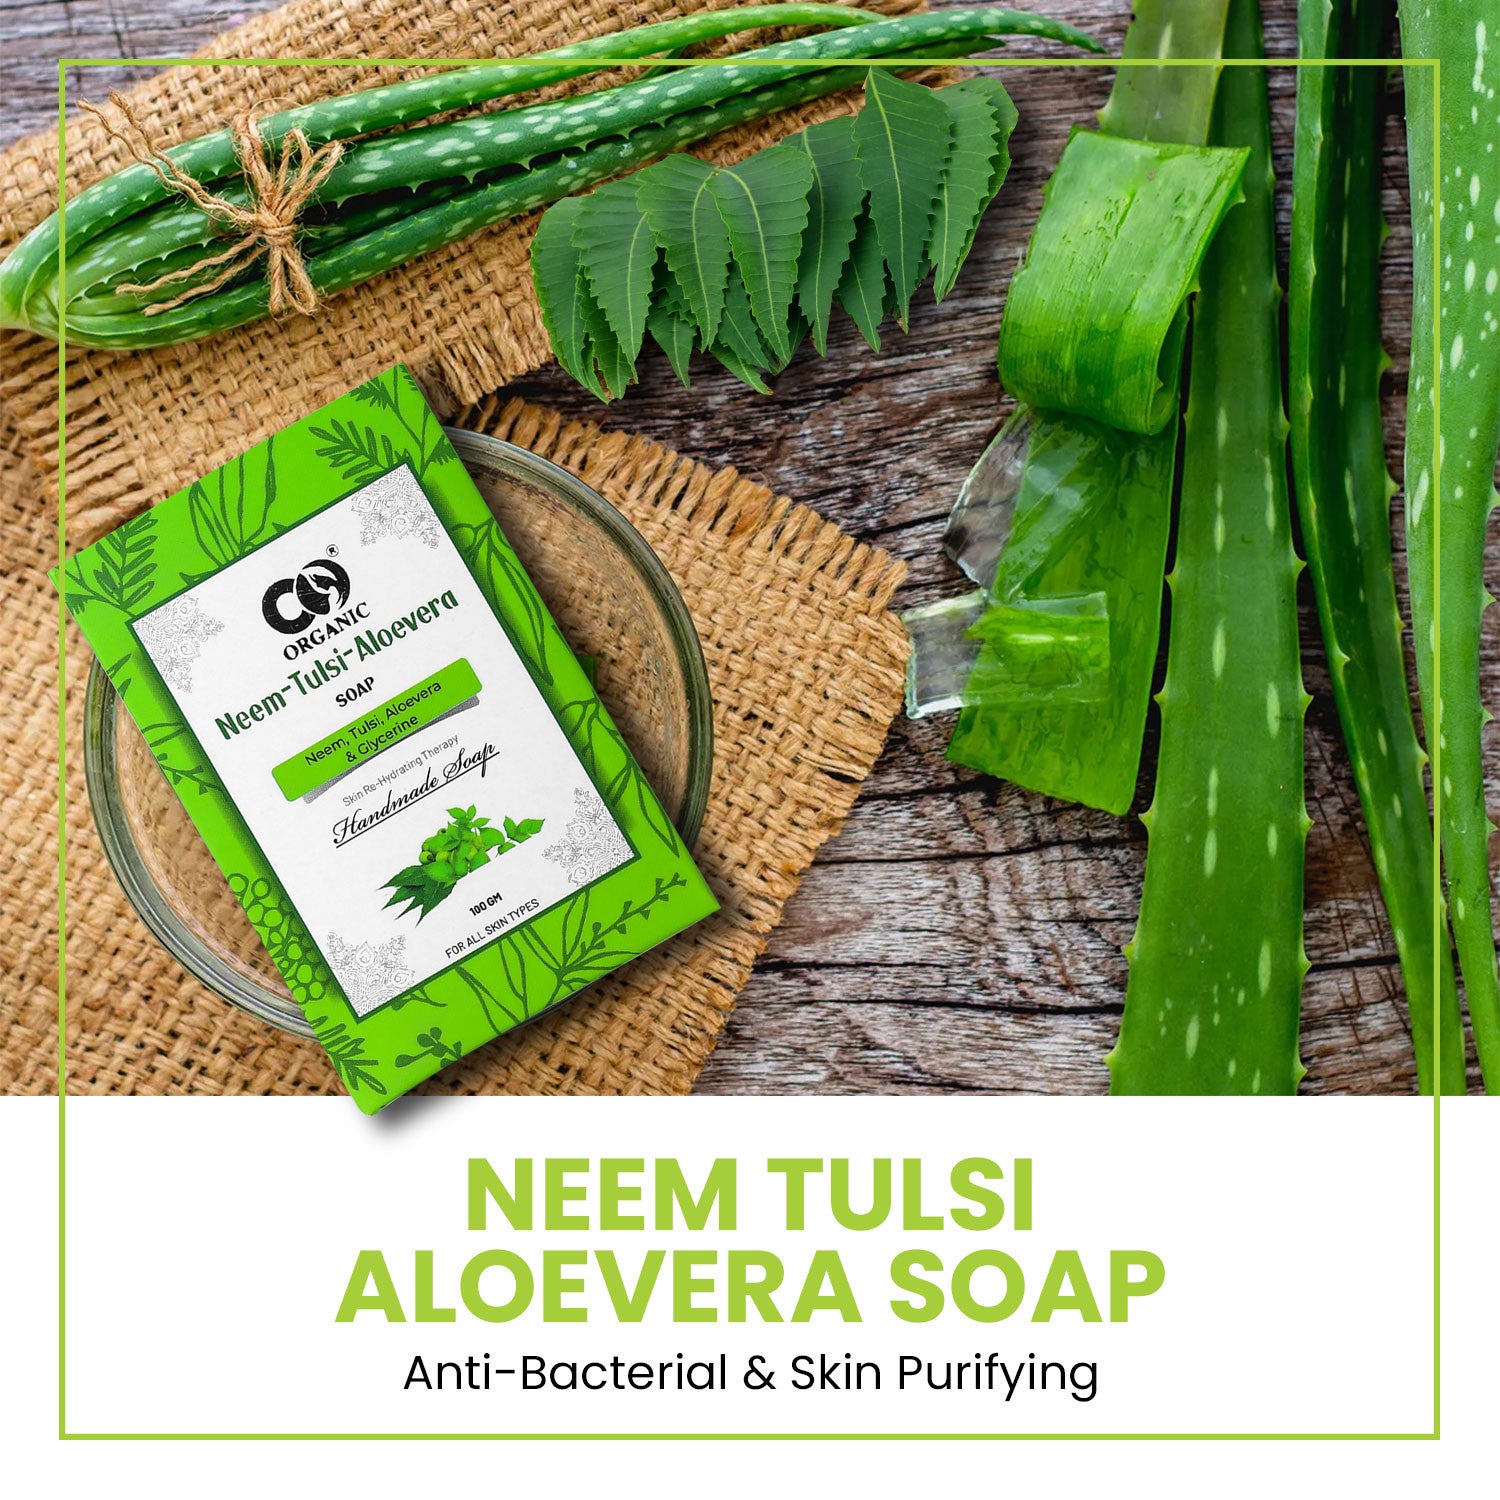 Co Organic Neem, Tulsi, Aloevera Soap - Pack of 2